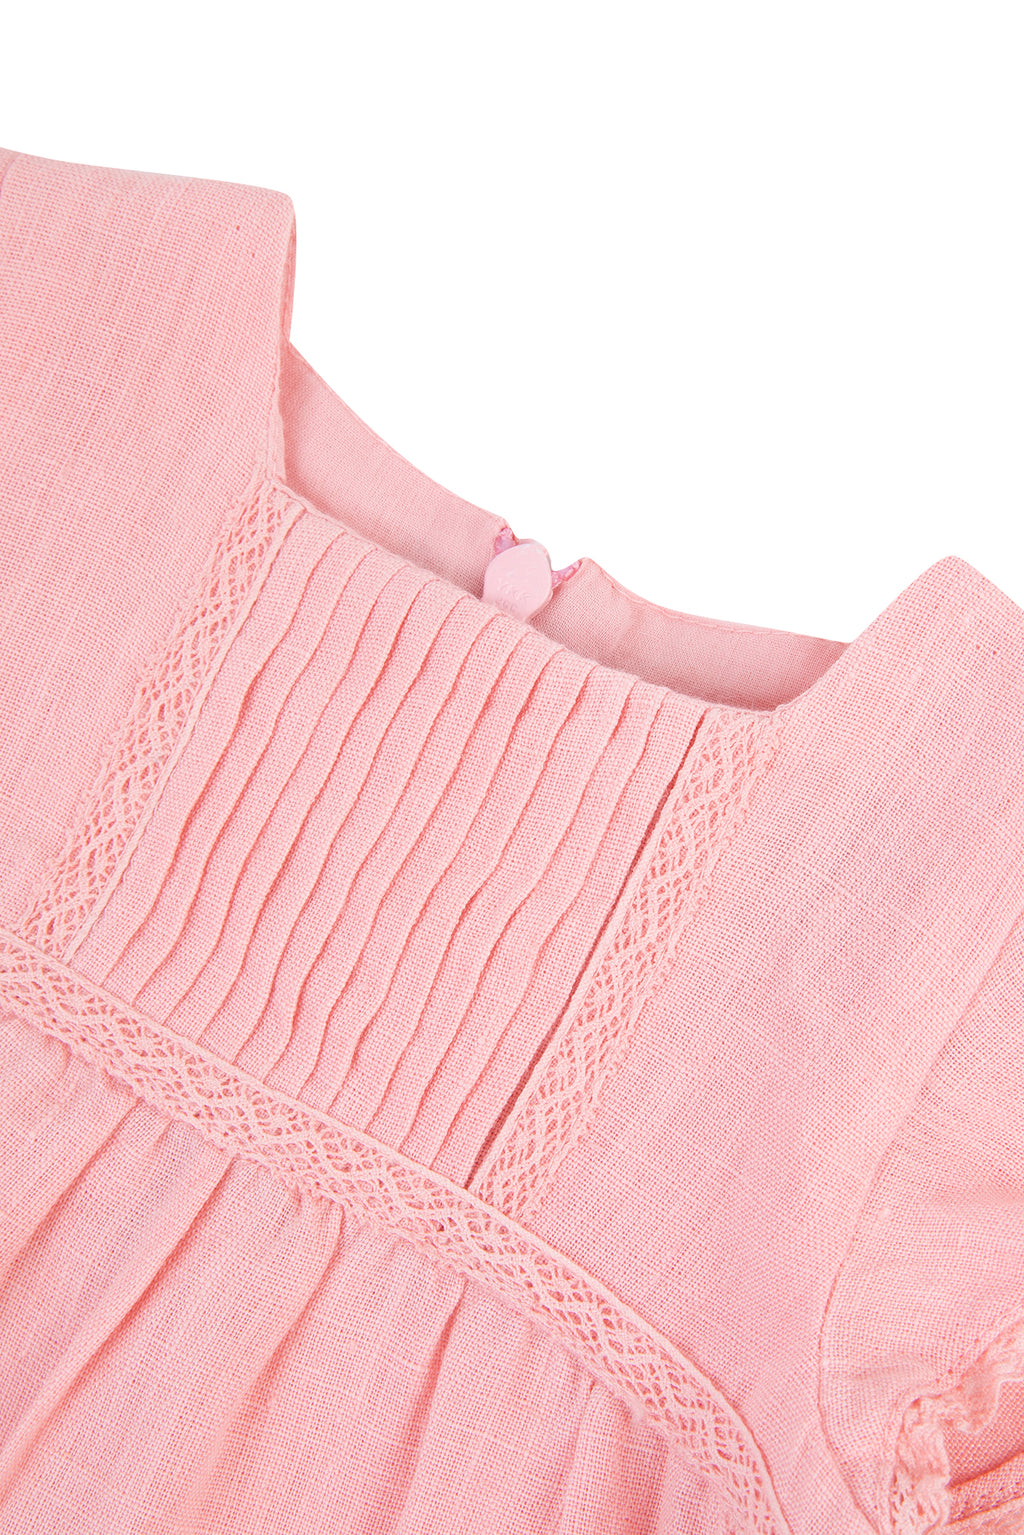 Dress - Pink Wheat field